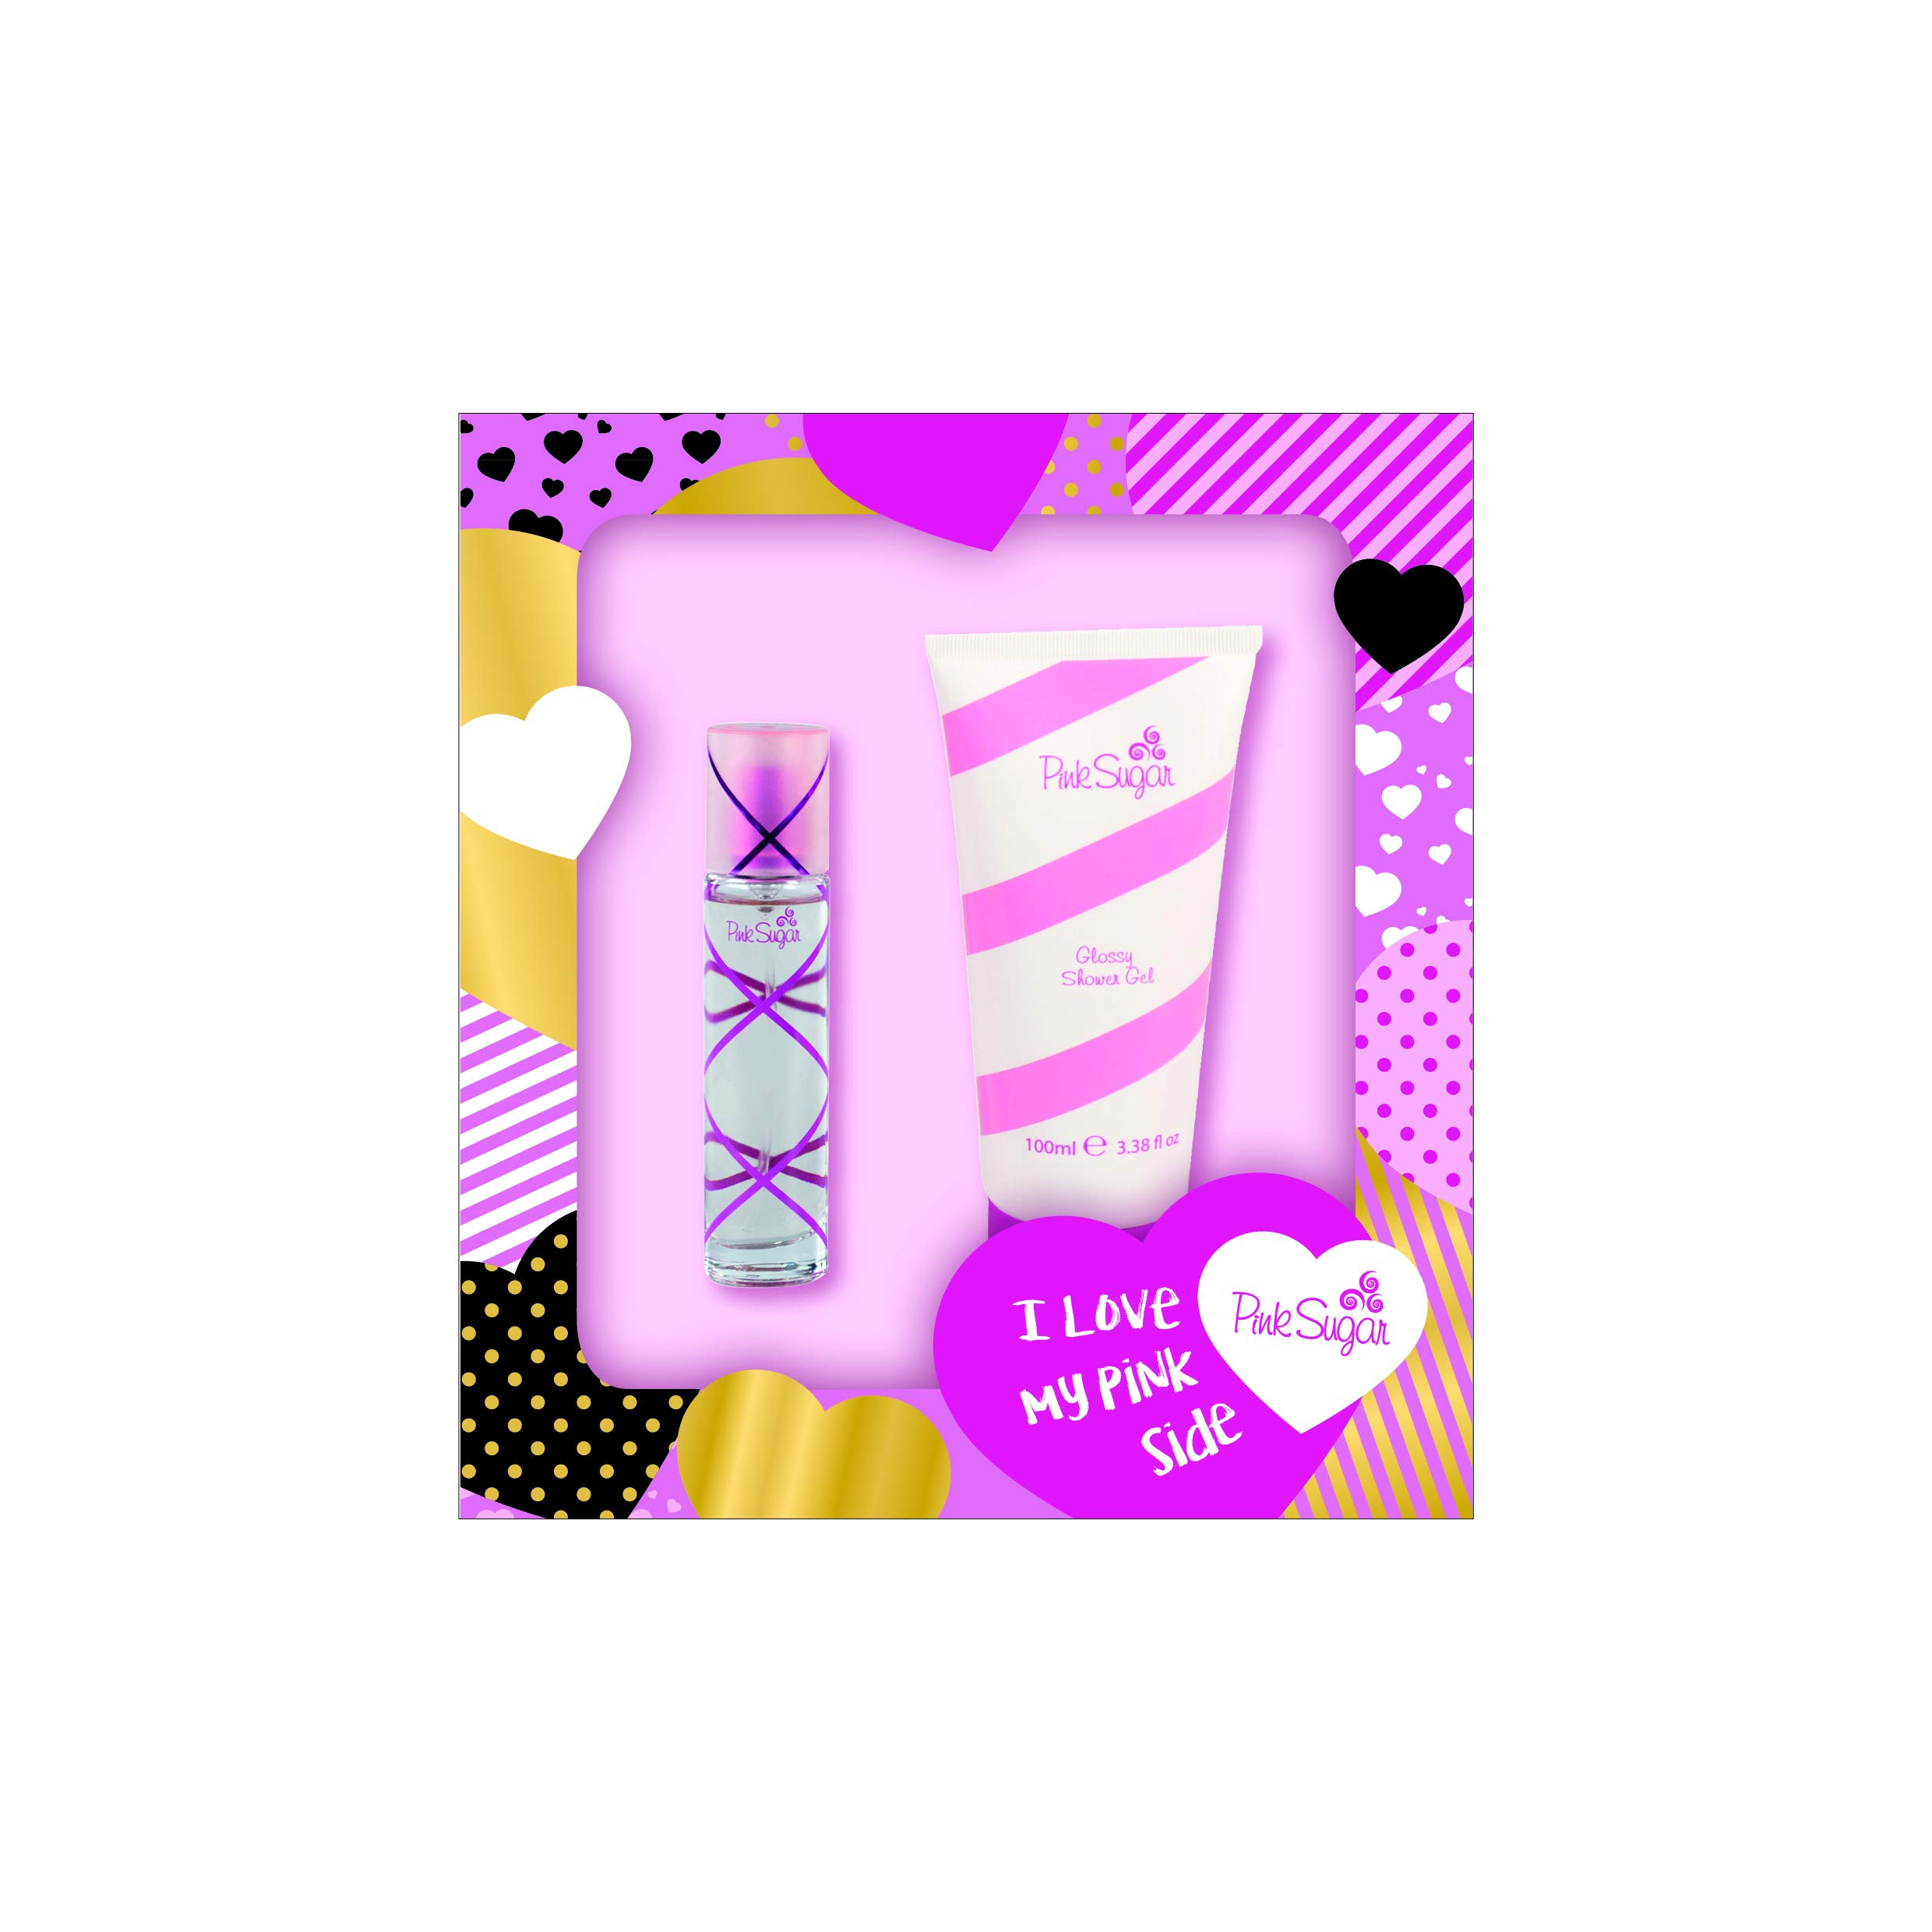 Pink Sugar 2 Pc Gift Set for Women, Travel Size Eau de Toilette Perfume + Shower Gel